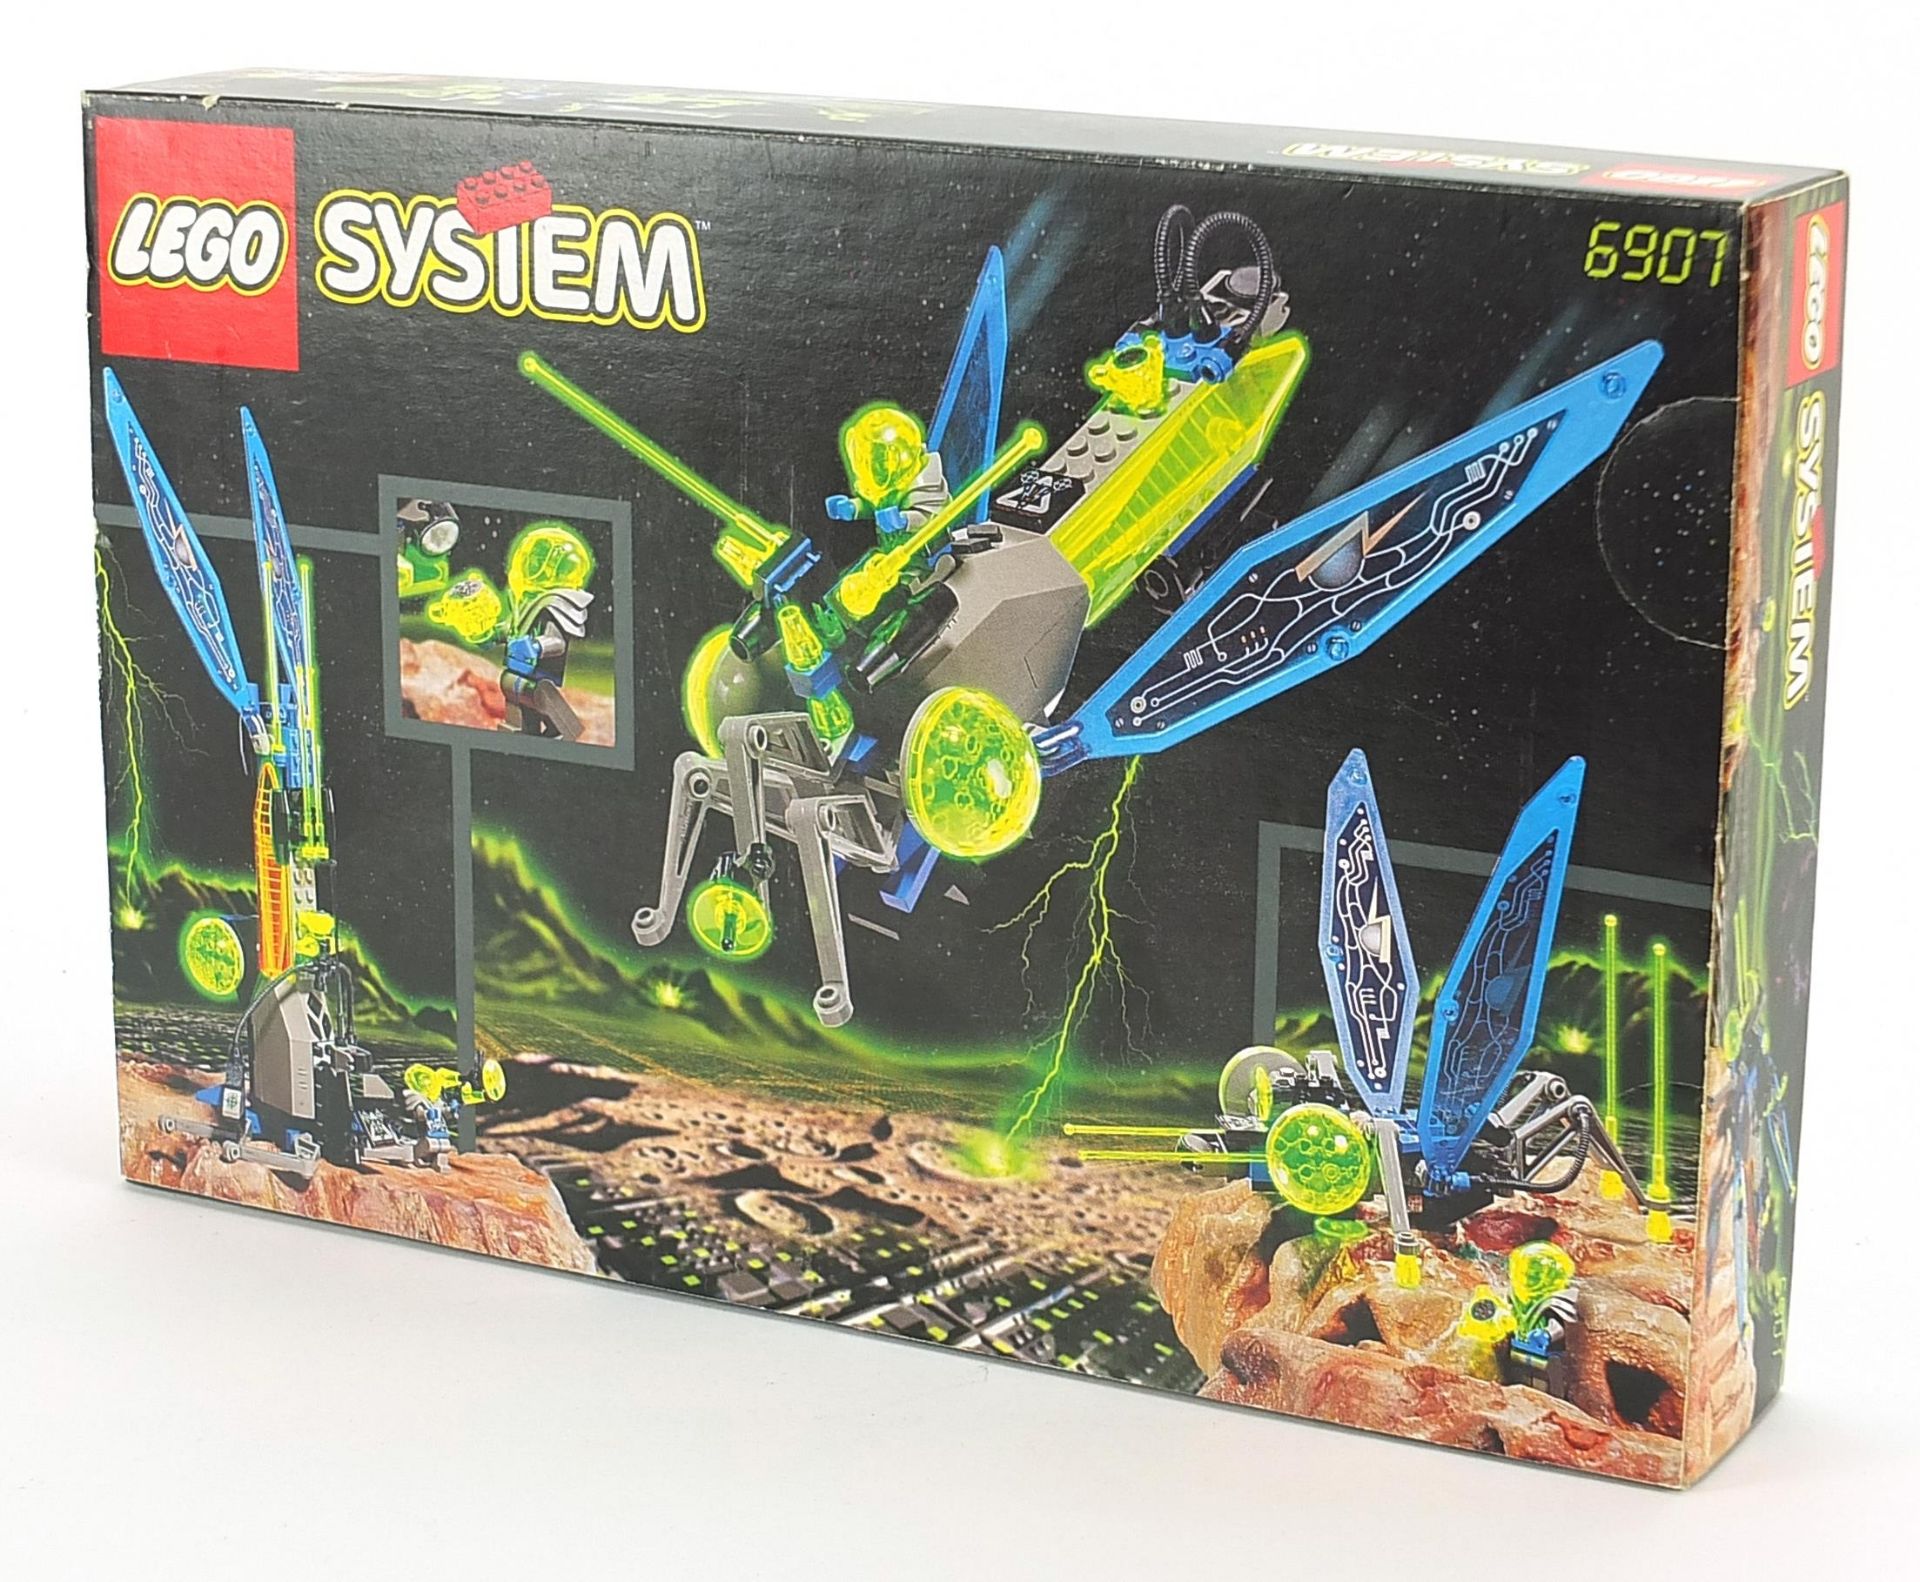 Vintage Lego System Sonic Stinger set with box, 6907 - Image 2 of 2